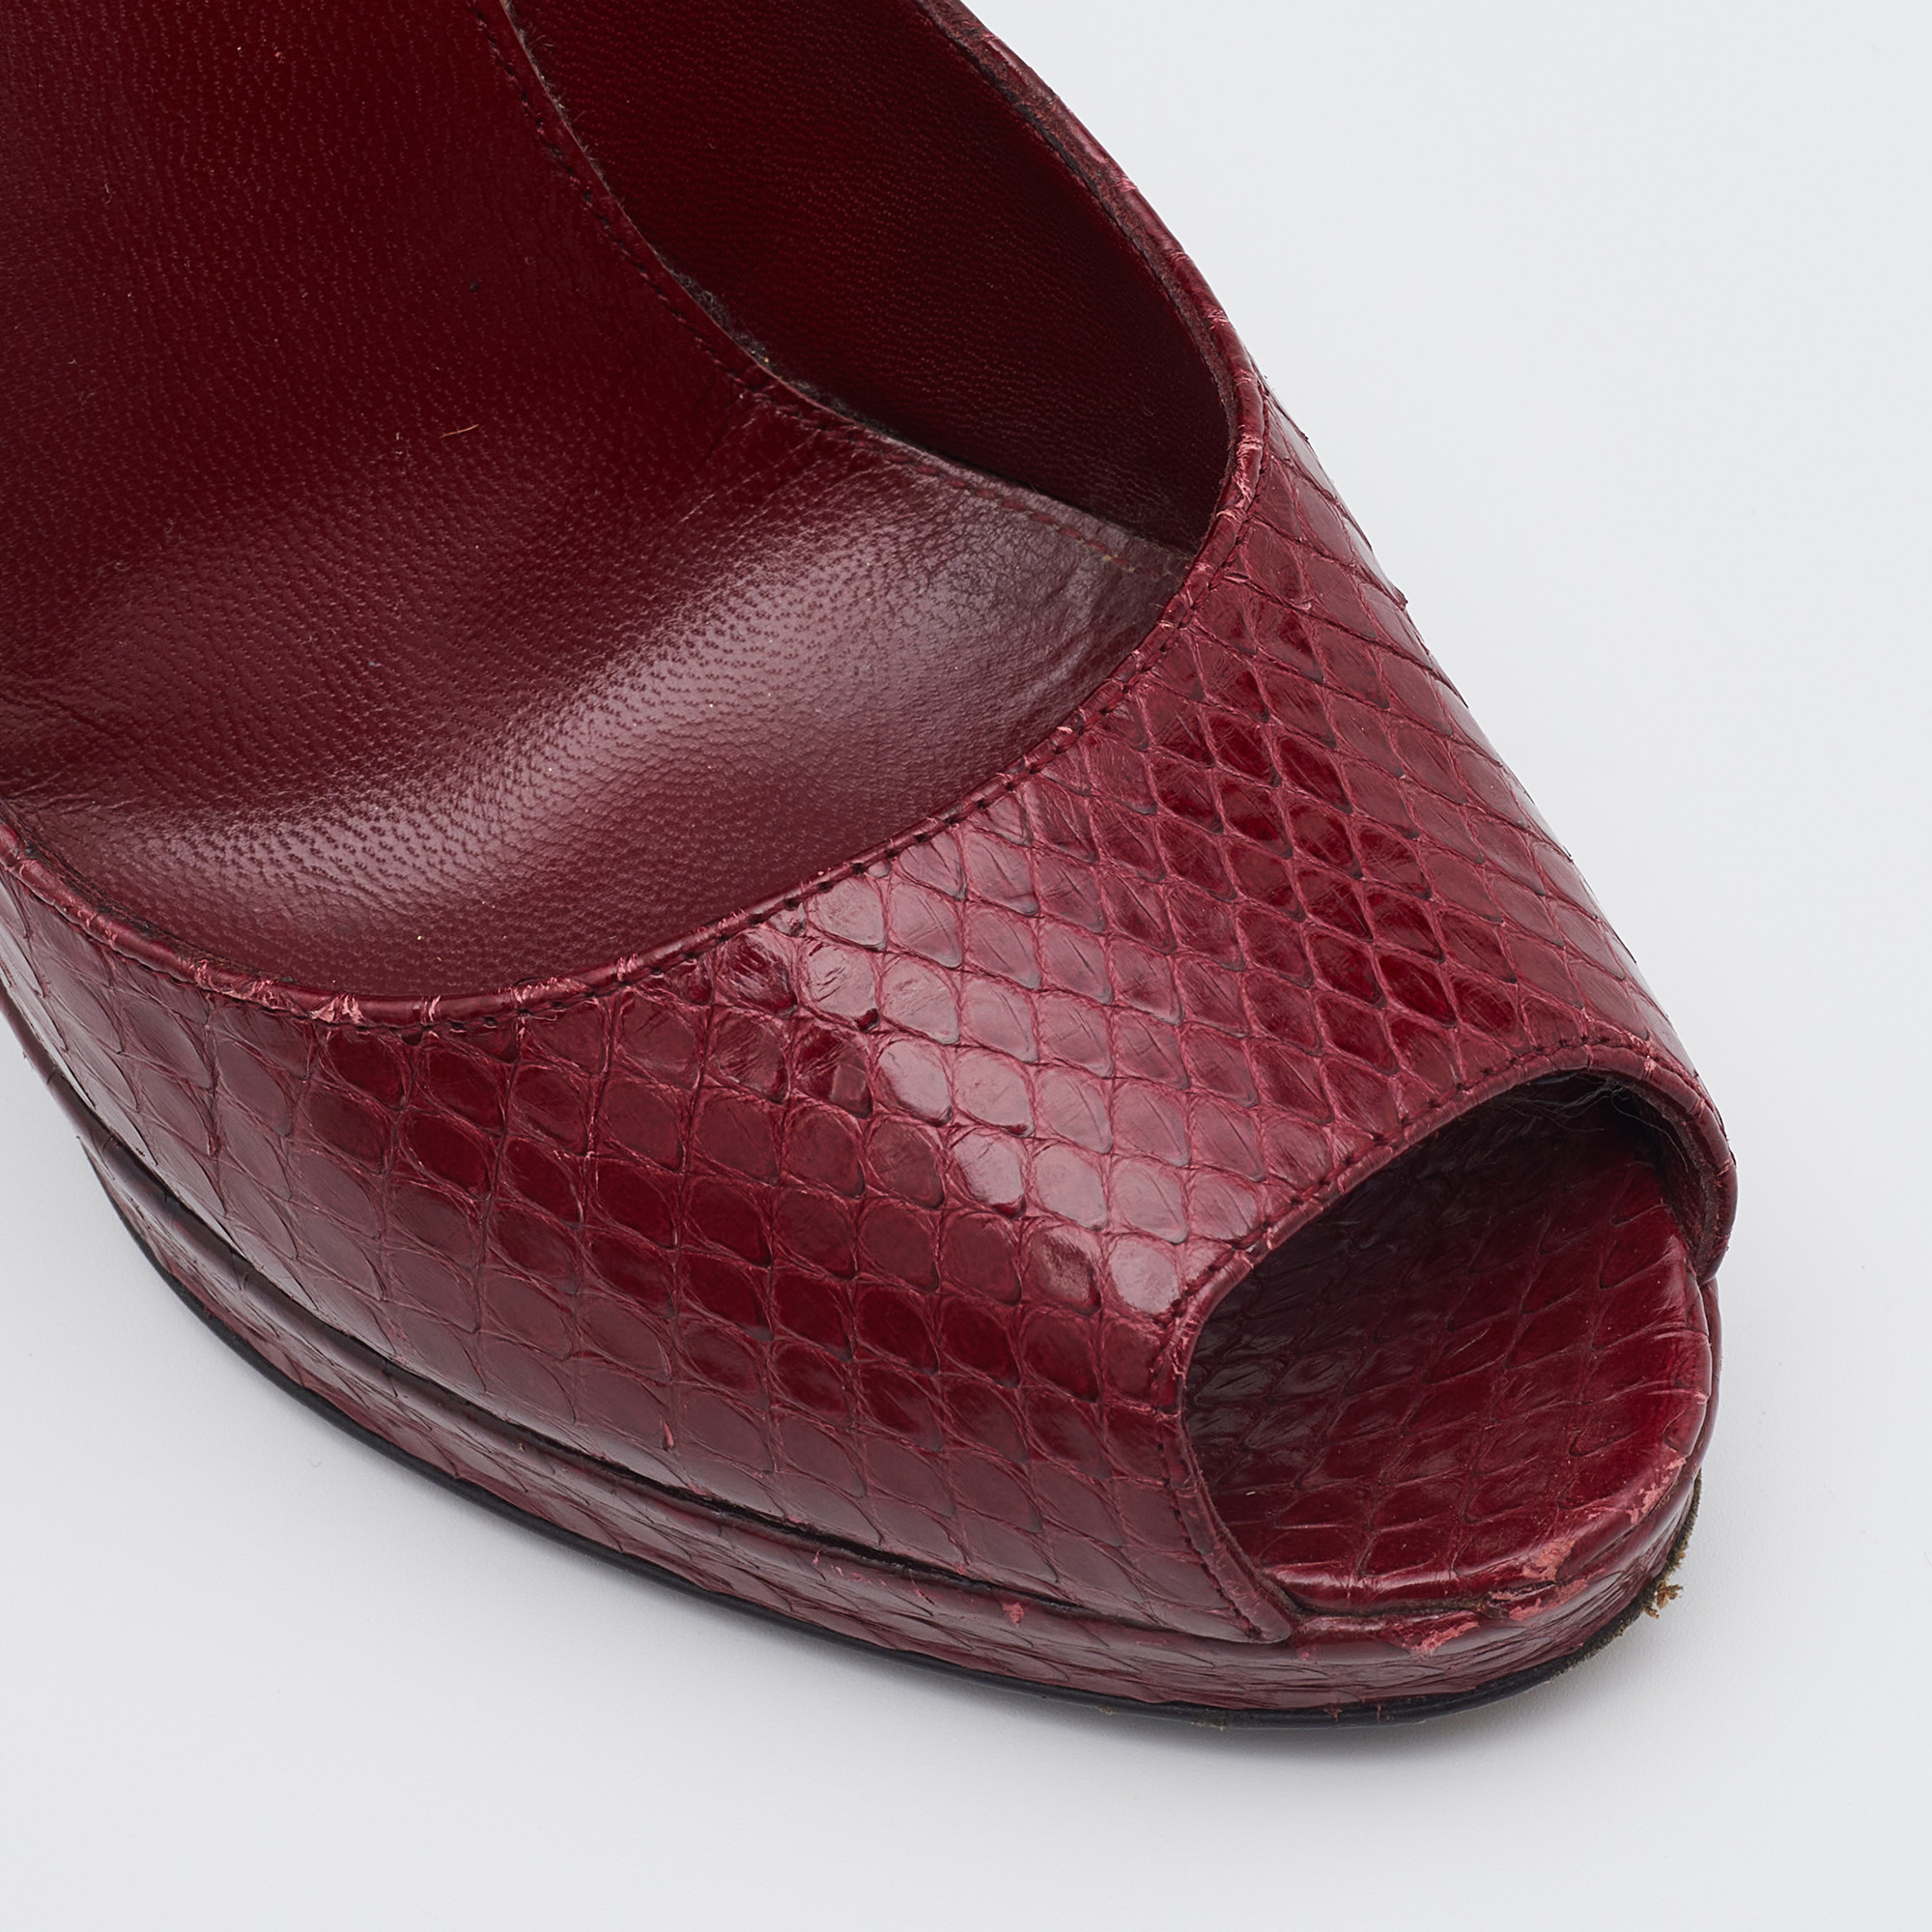 Sergio Rossi Dark Red Python Leather Peep Toe Pumps Size 36